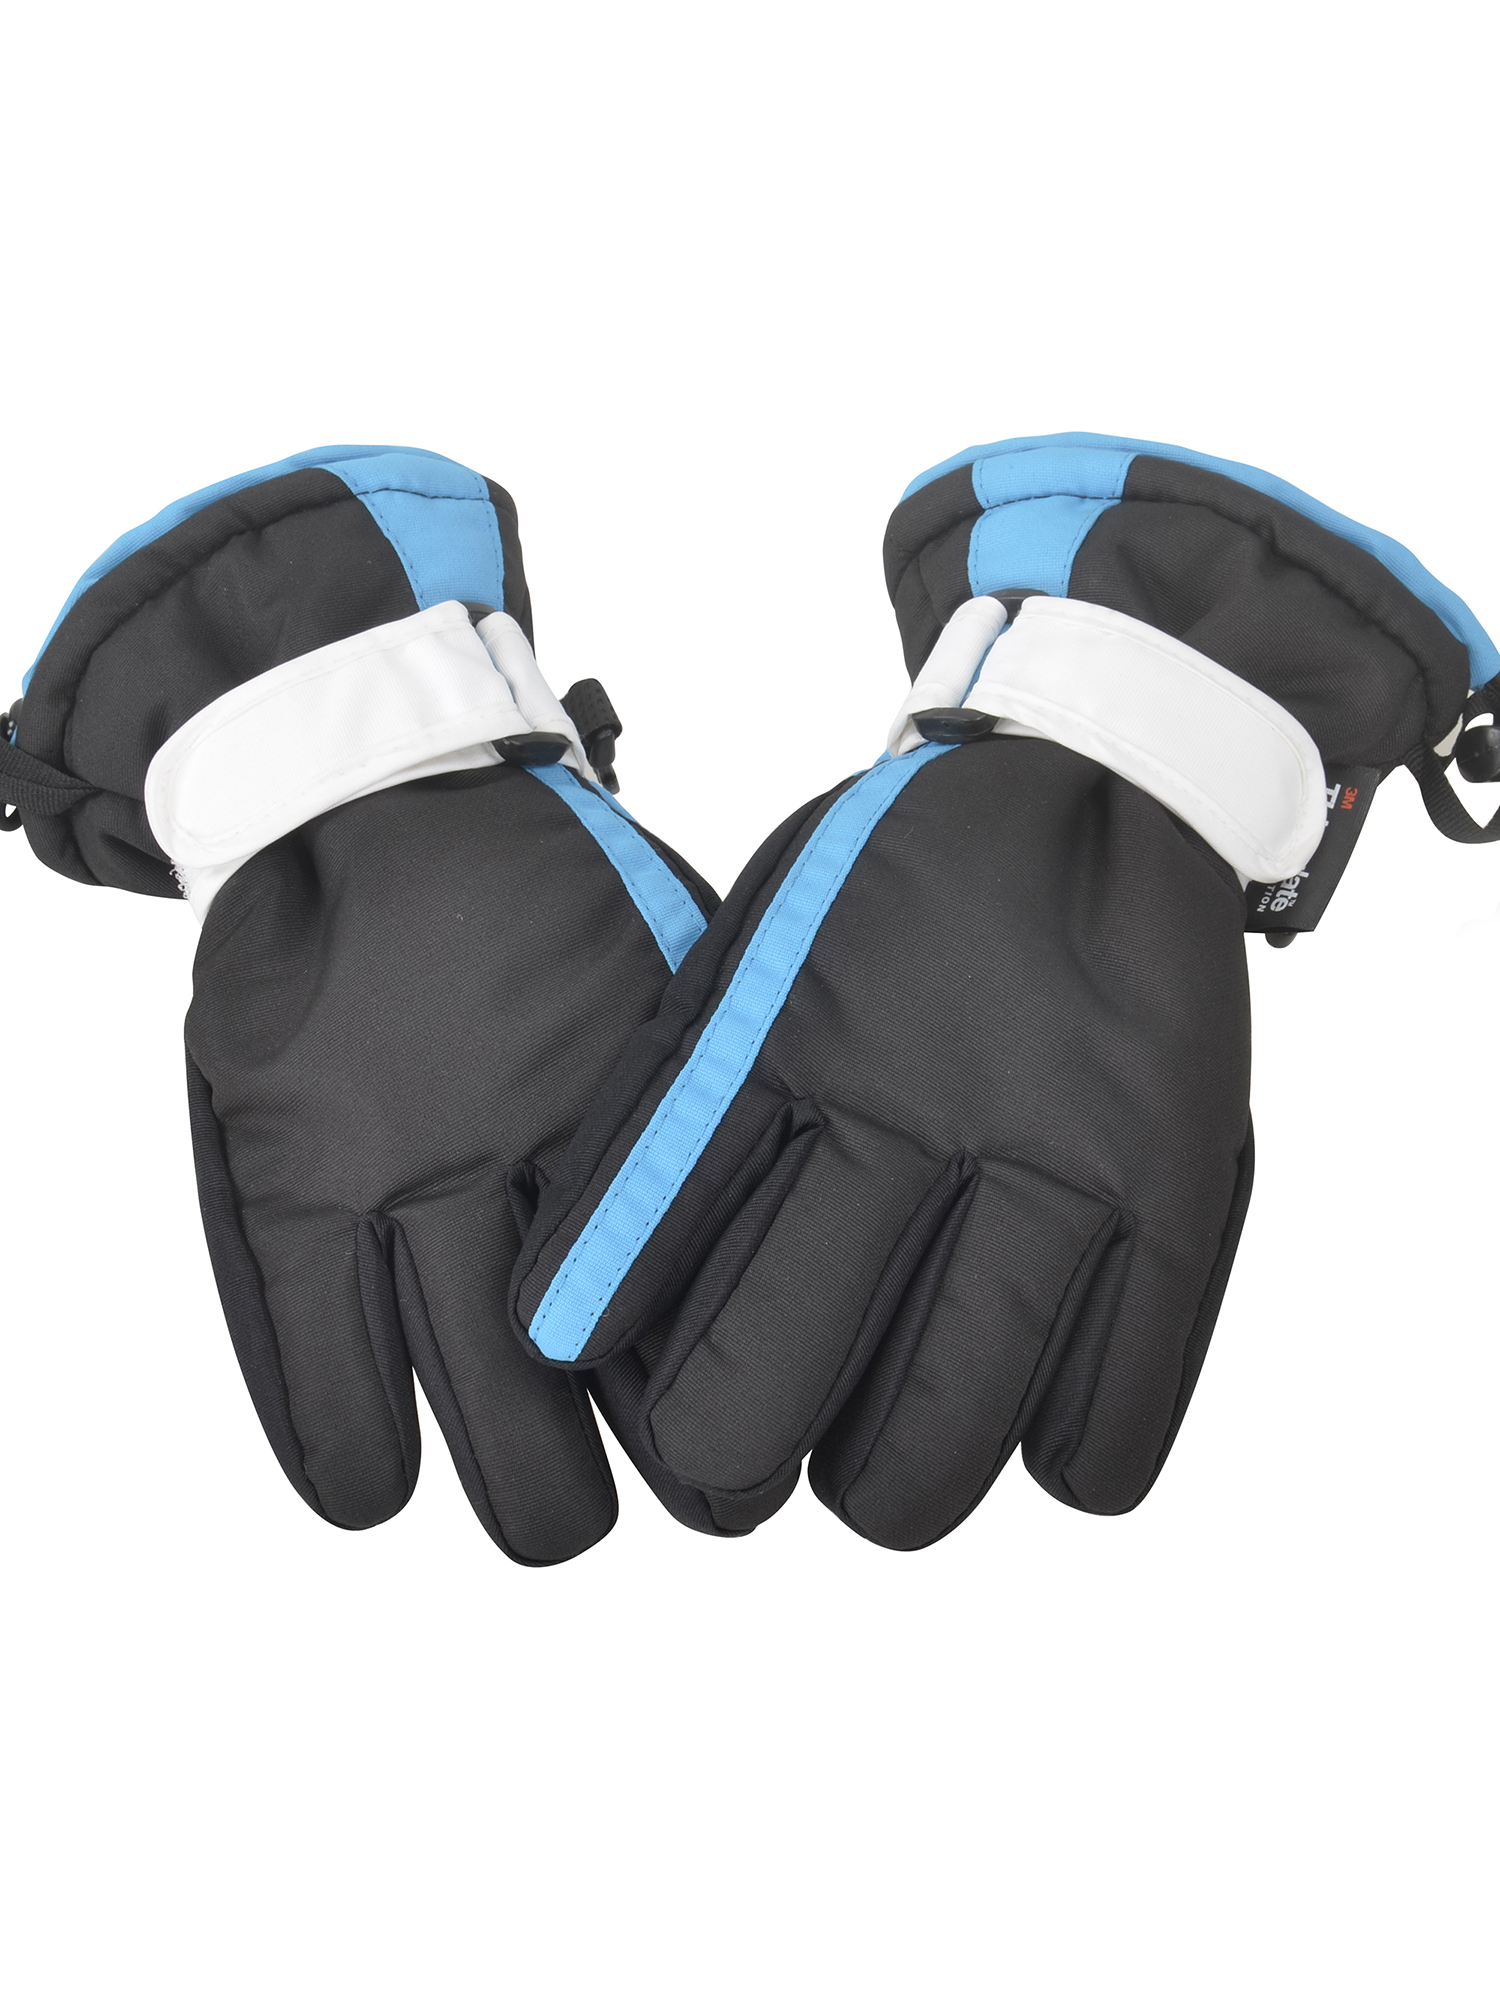 Simplicity Boys Kids Waterproof Thinsulate Colorblocked Snow Ski Gloves, M - image 2 of 4